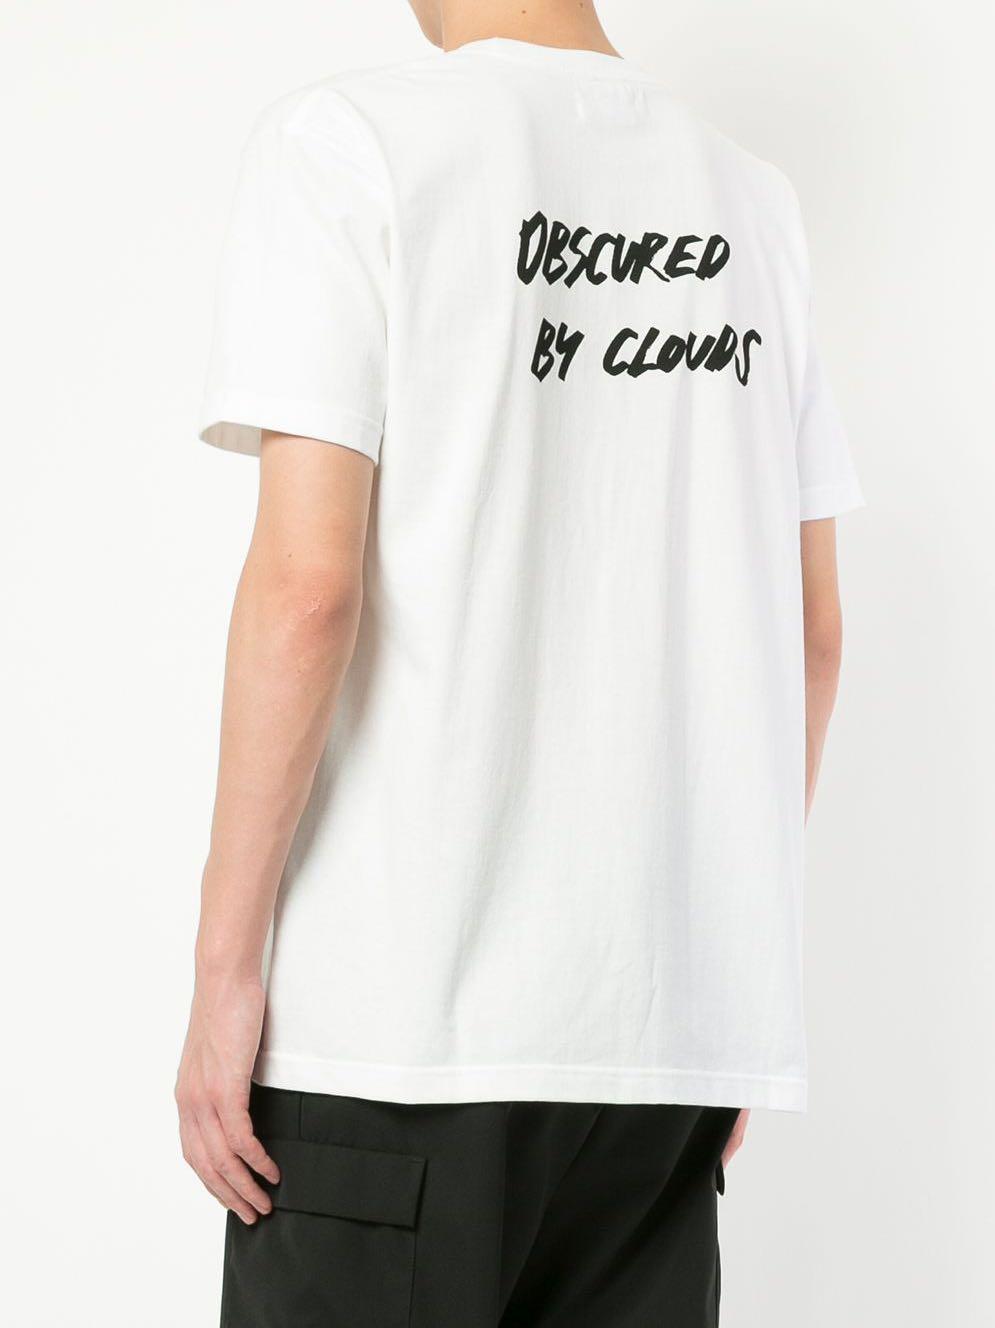 Kiko Kostadinov 00052018 ‘Obscured By Clouds’ T-Shirt